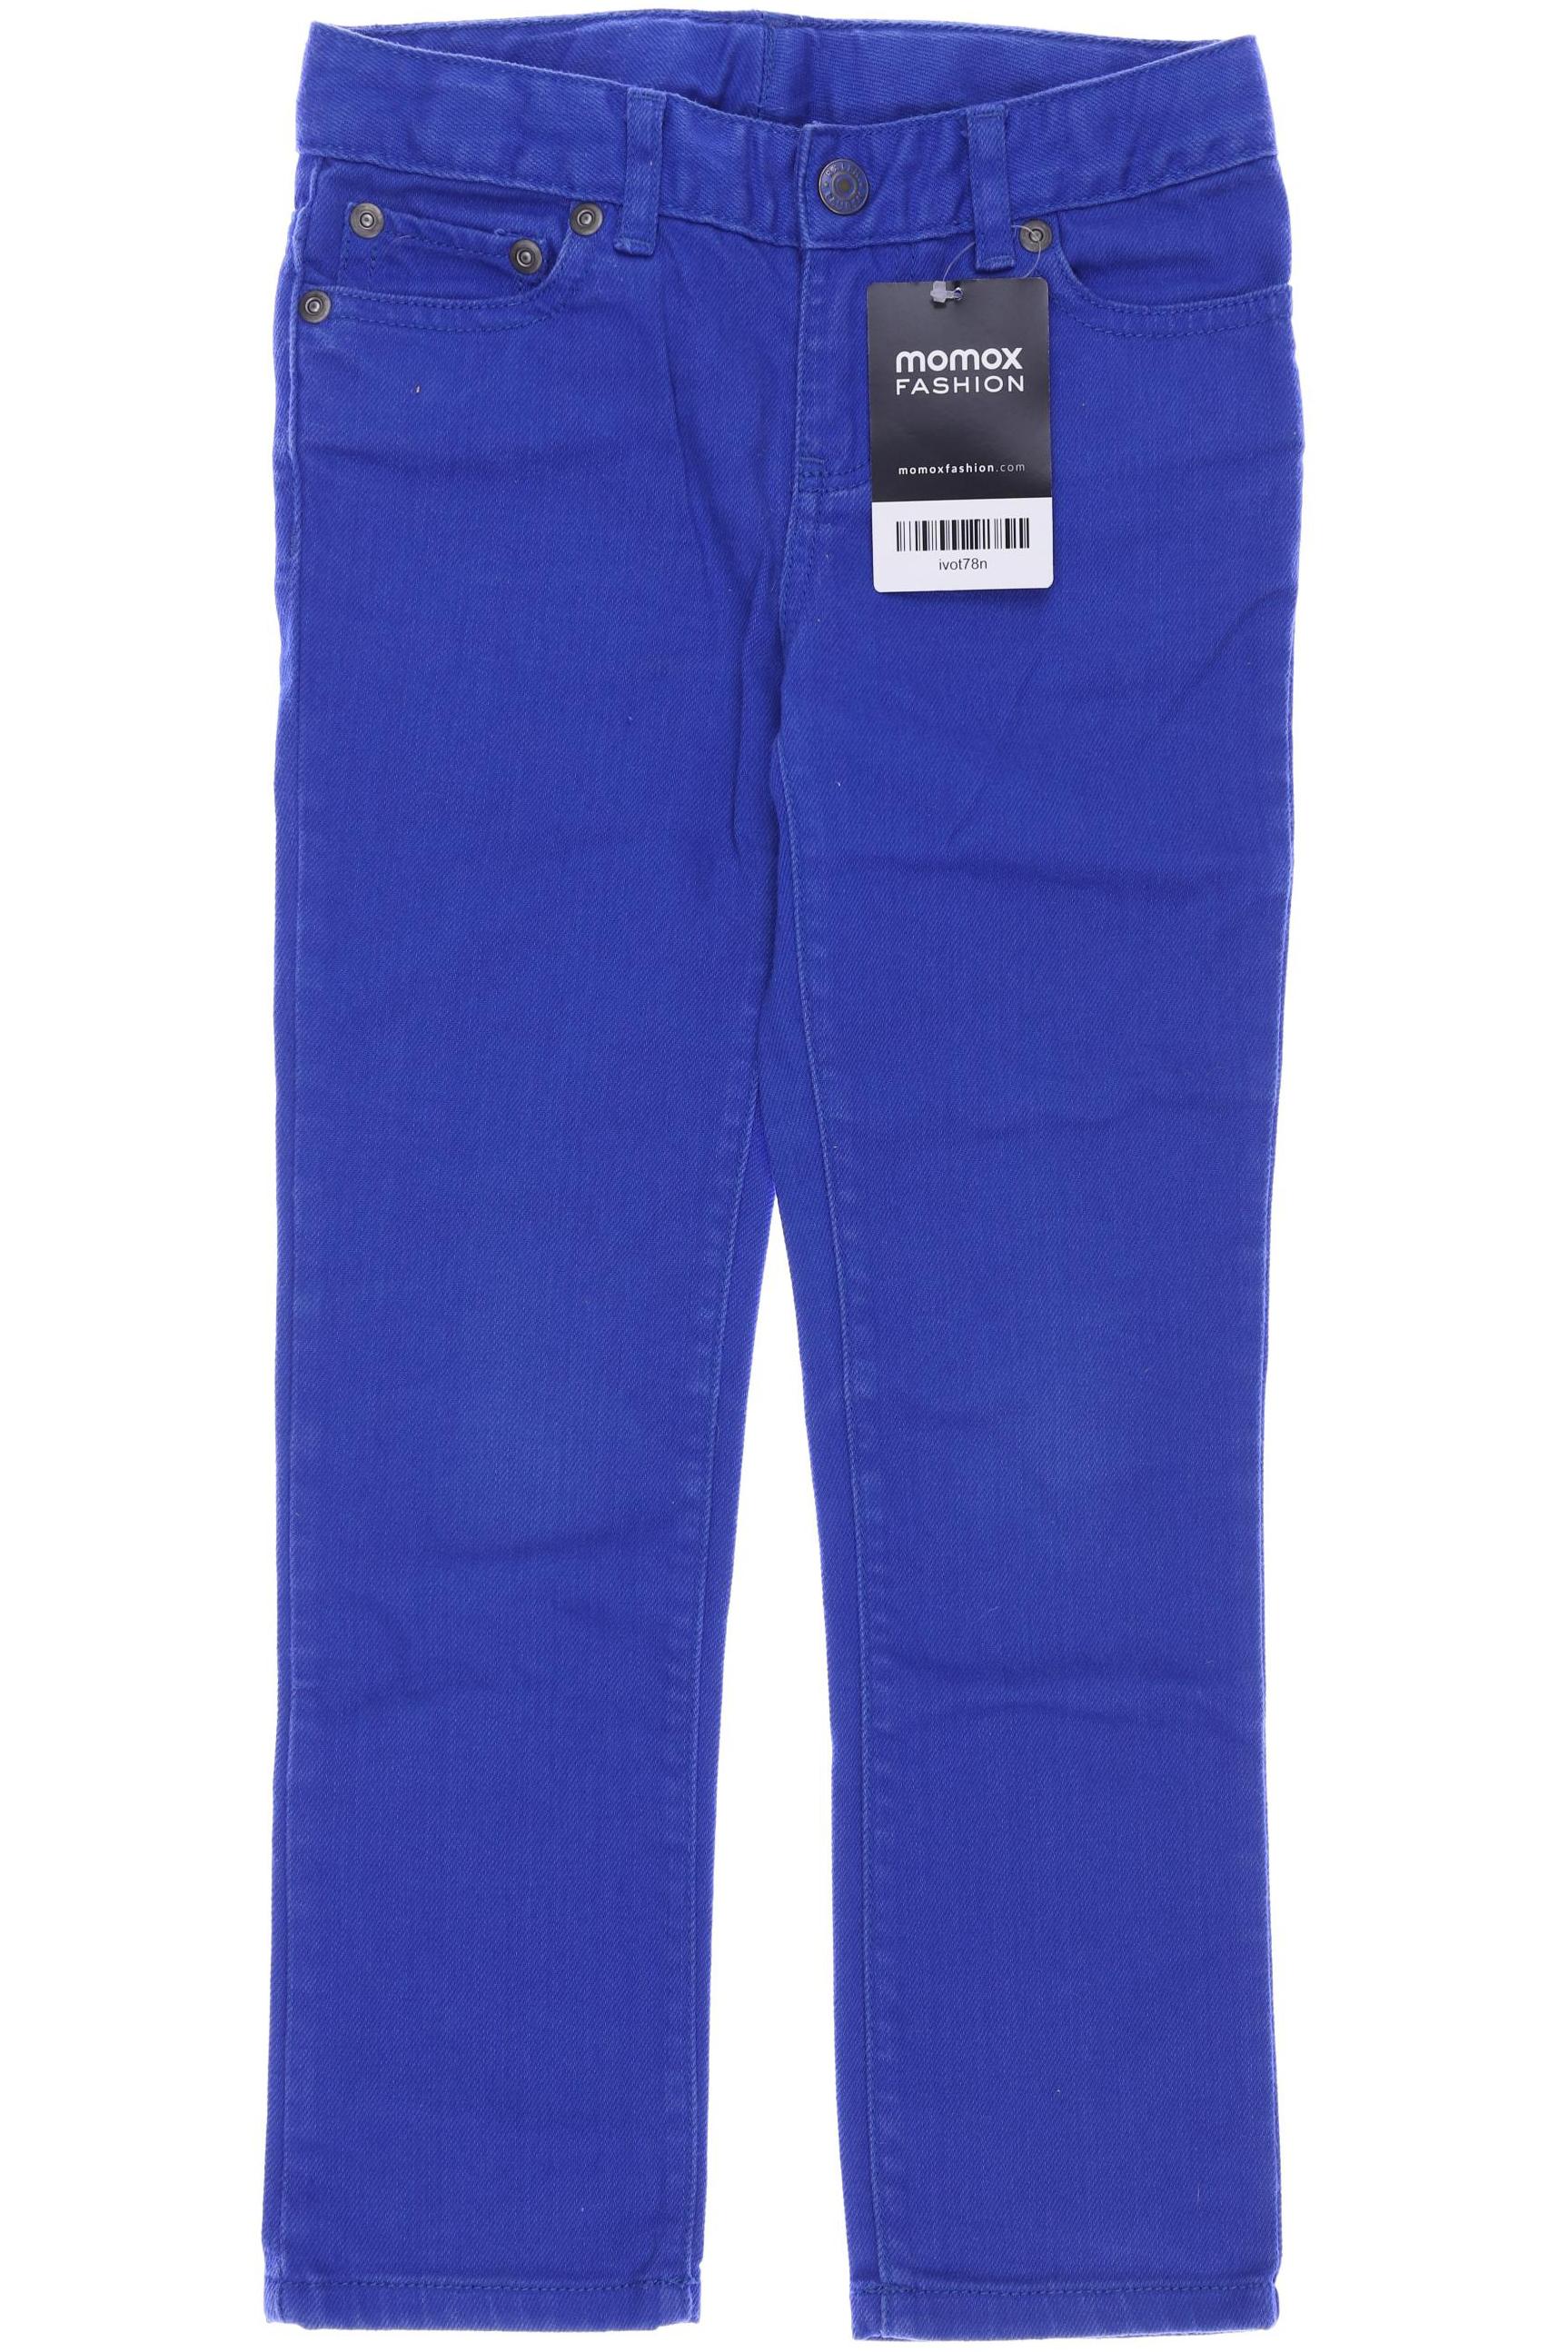 Polo Ralph Lauren Damen Jeans, blau, Gr. 116 von Polo Ralph Lauren